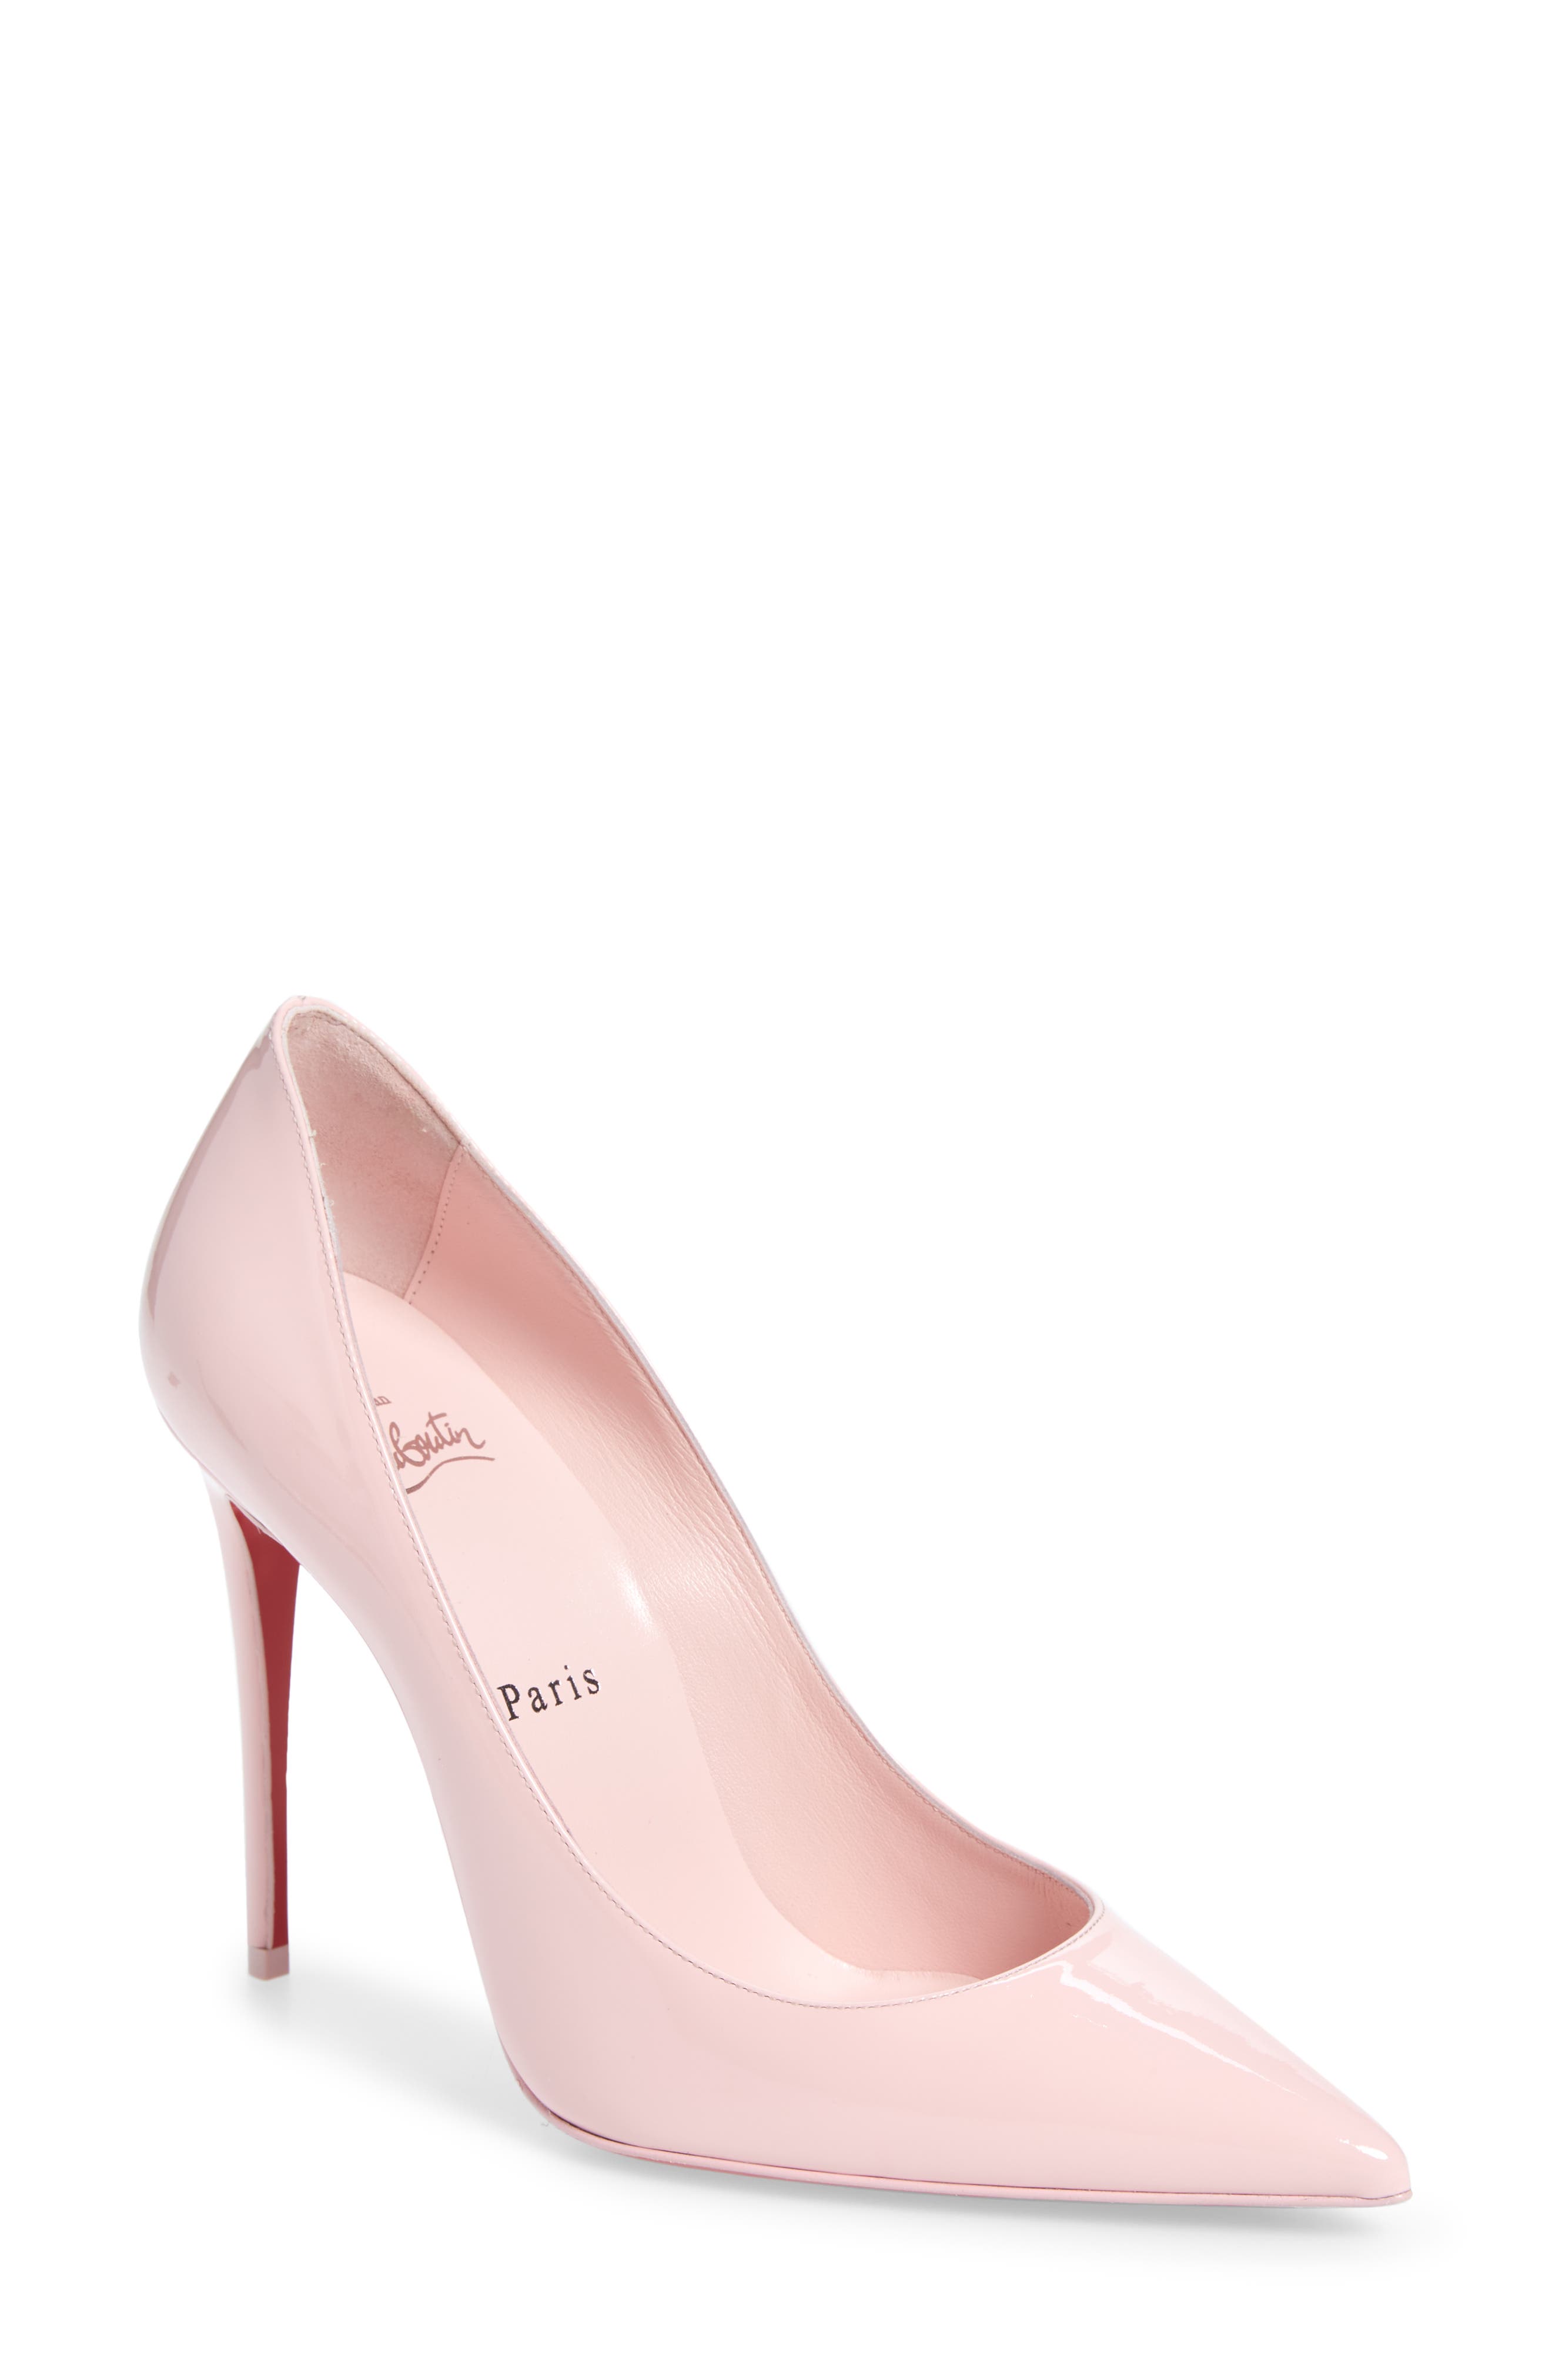 louboutin pink shoes